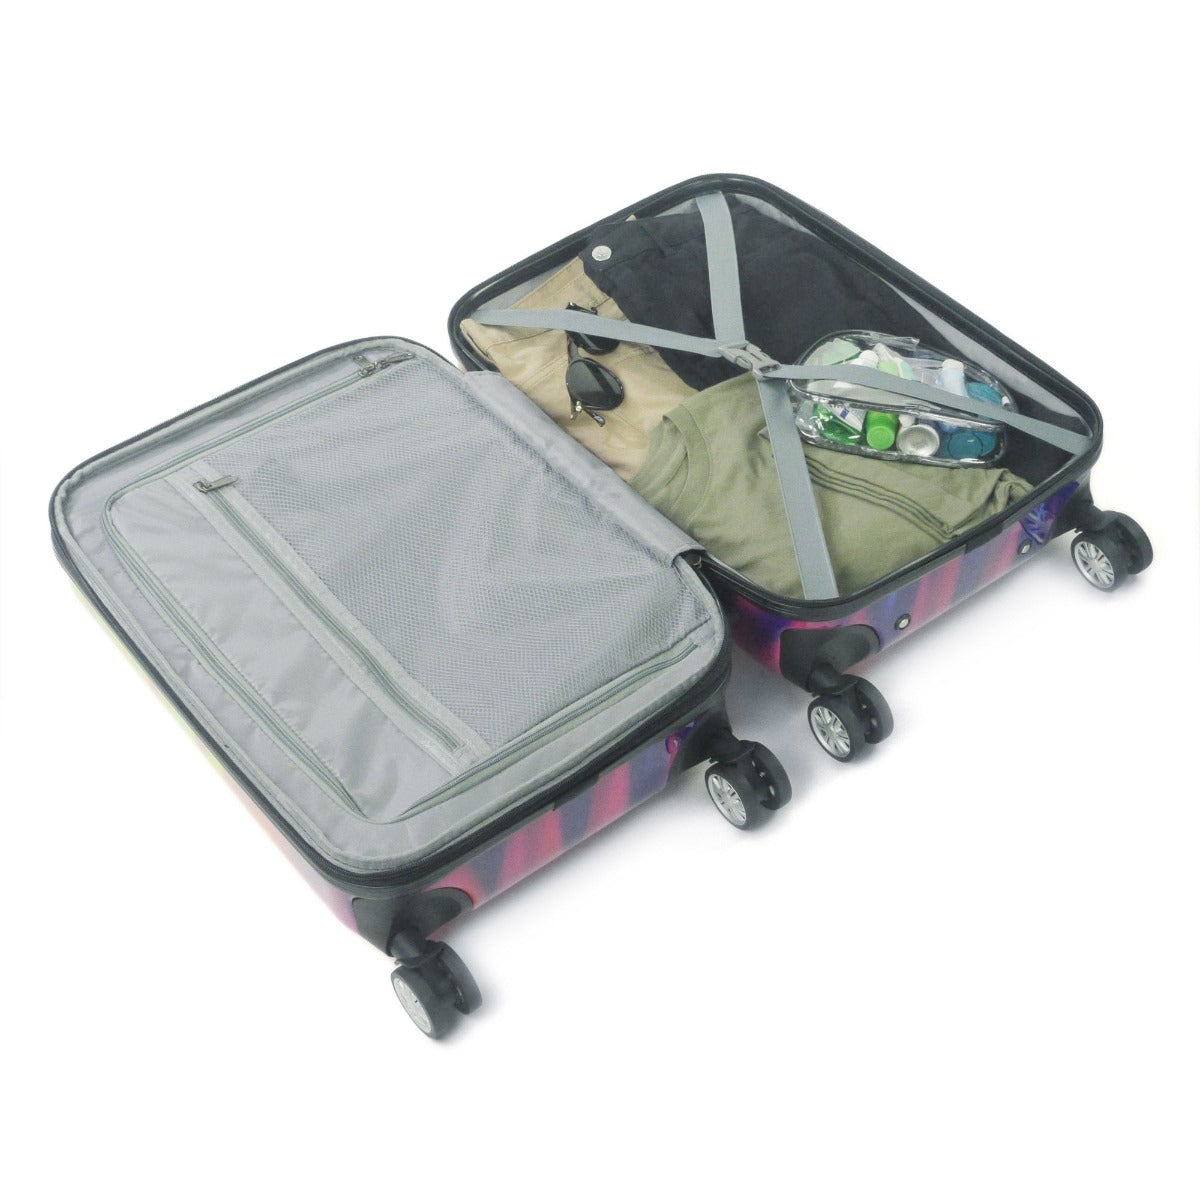 Buy VIP Plastic Hard 55 Cms Luggage- Suitcase(Foxavt55Csl_Blue) at Amazon.in